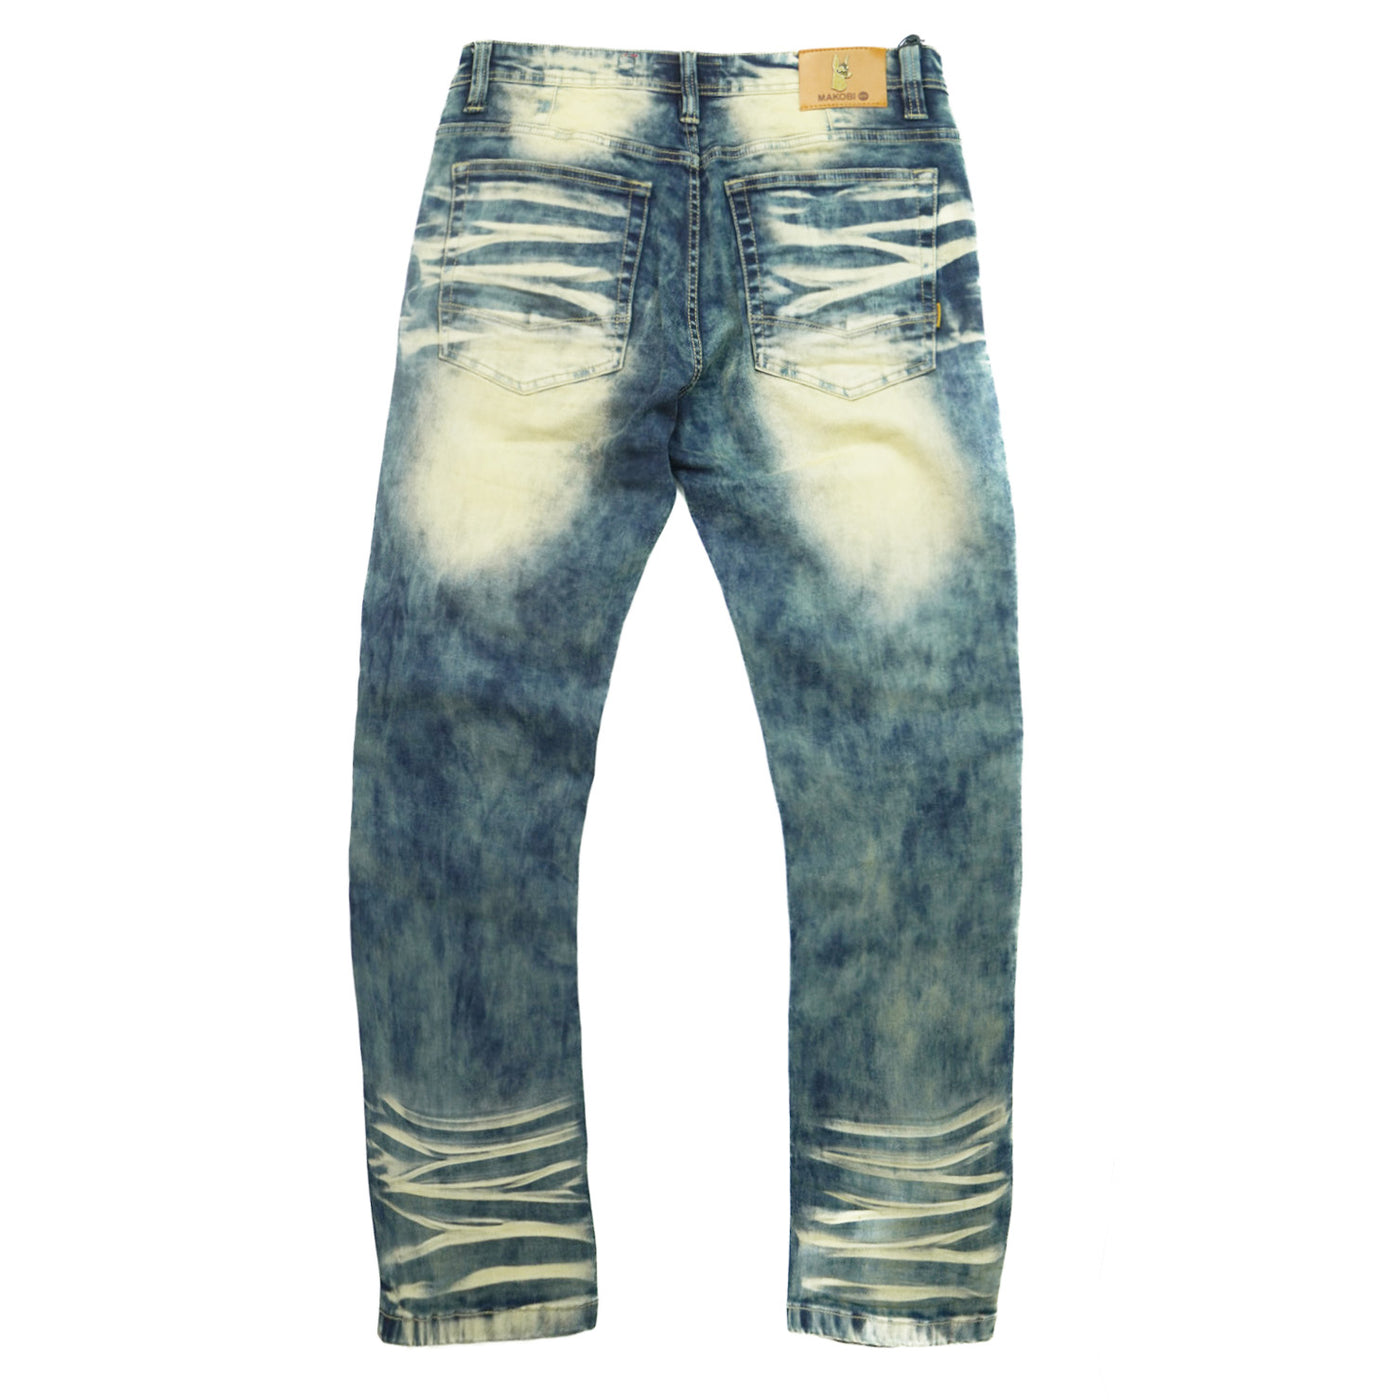 M1967 Makobi David Denim Jeans - Vintage Wash